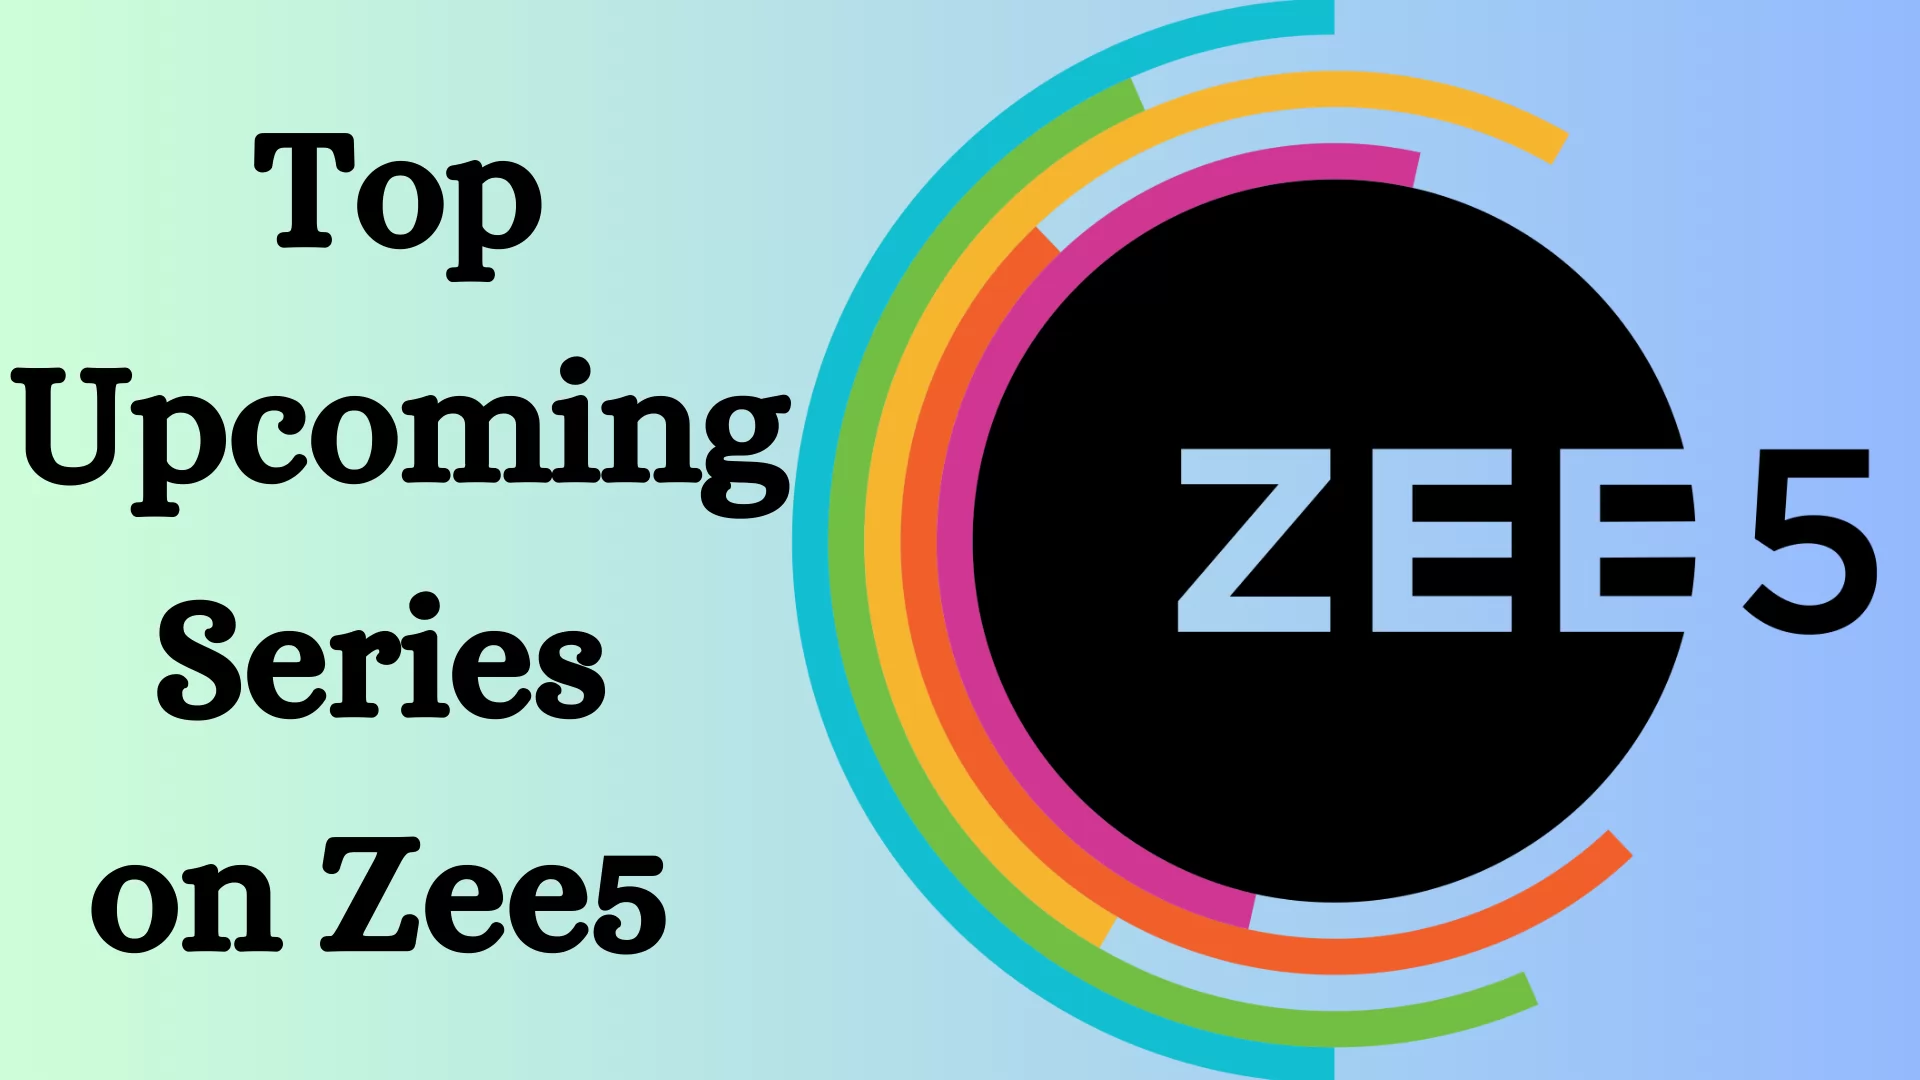 Top Upcoming Series on Zee5 